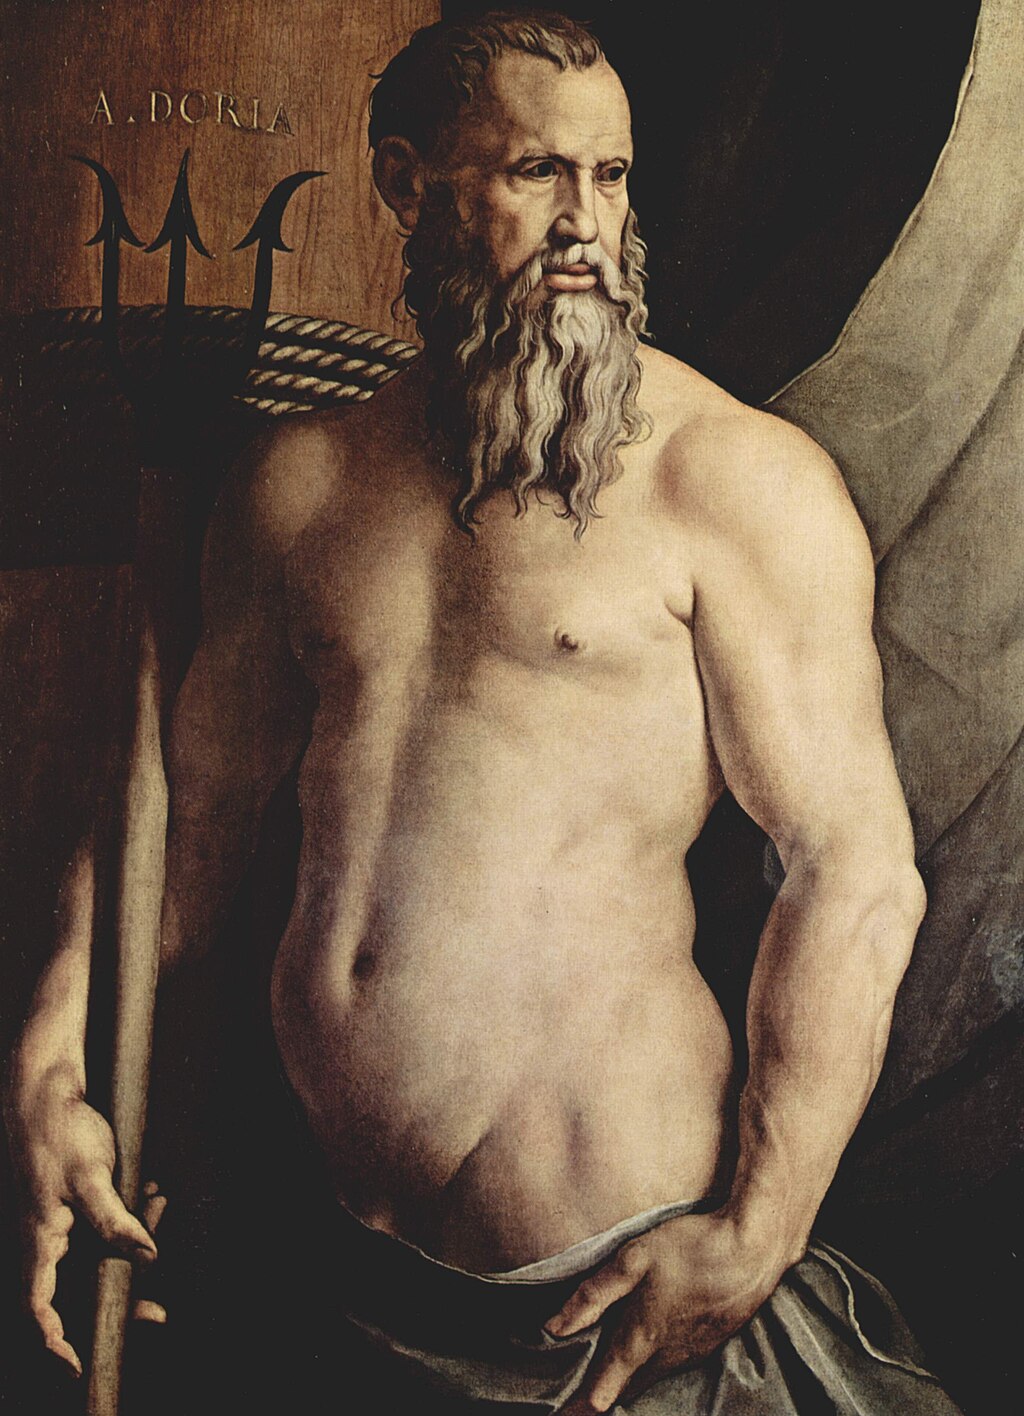 Andrea Doria as Neptun by Angelo Bronzino